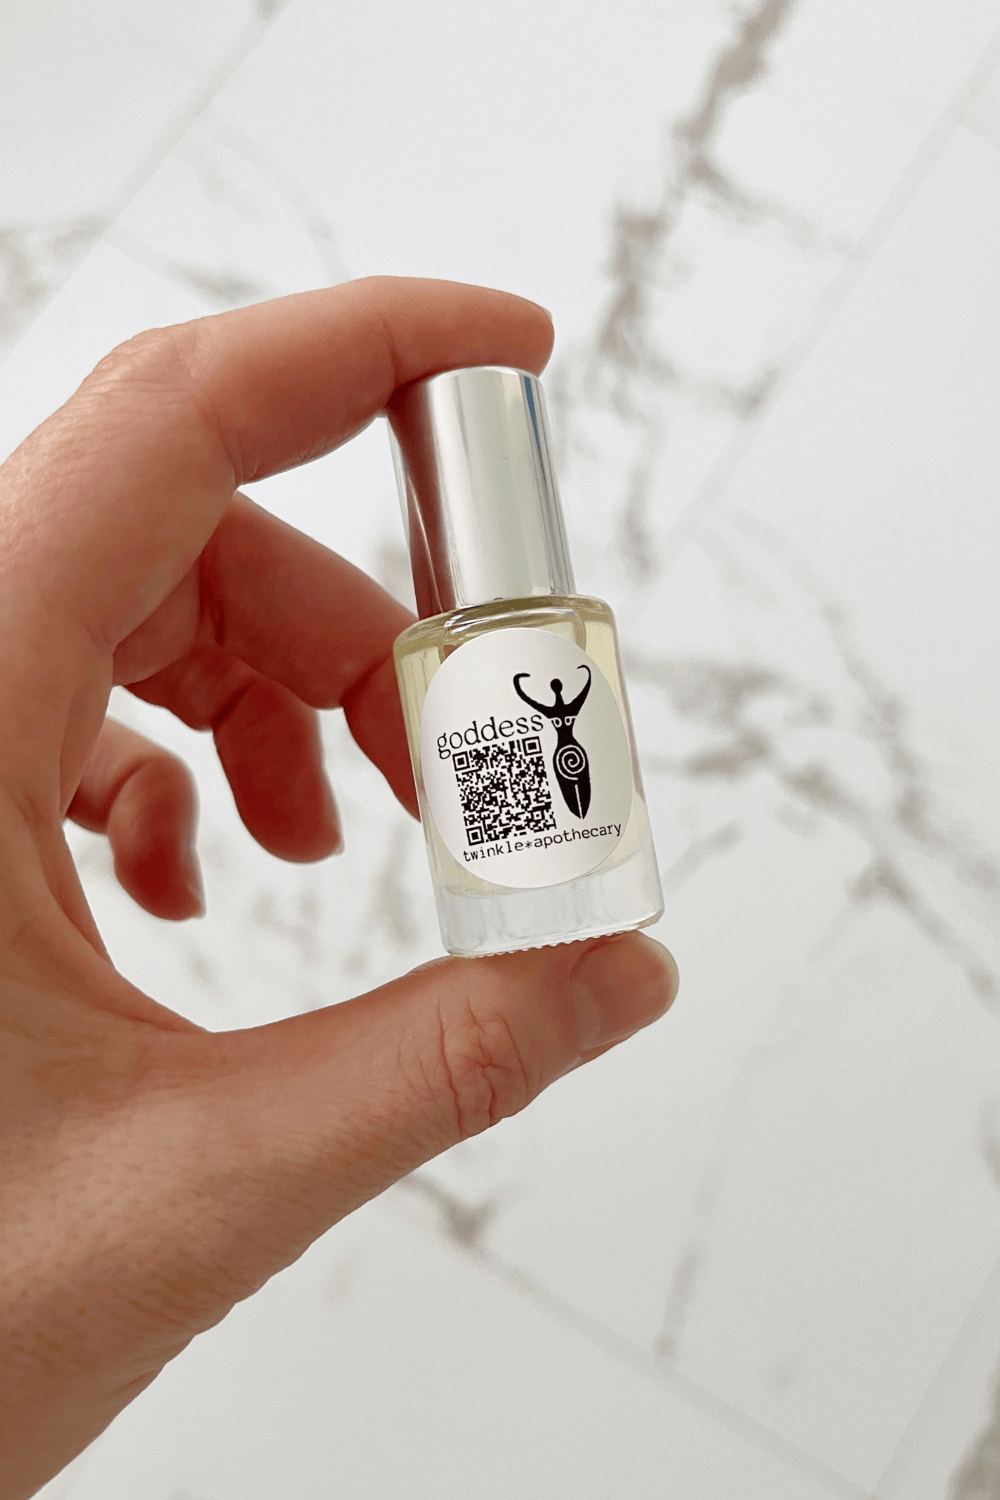 goddess perfume twinkle apothecary 